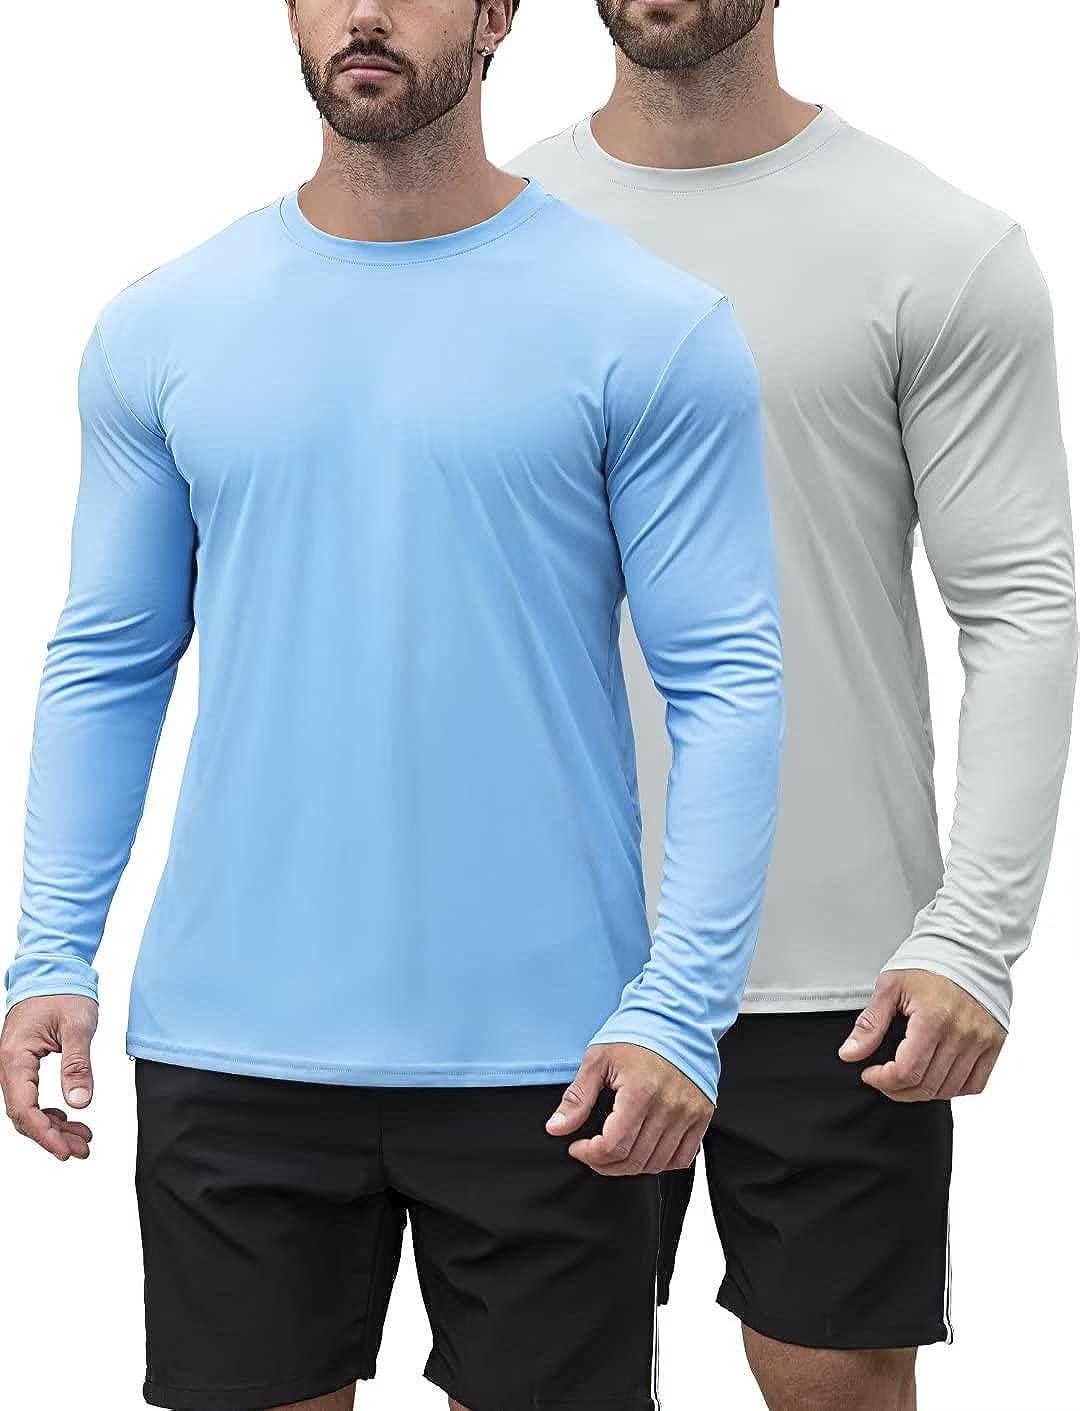  Roadbox 2 Pack UPF 50+ Fishing Shirts for Men Long Sleeve Sun  Protection Hoodie Lightweight Outdoor UV Hiking Shirts : Sports & Outdoors